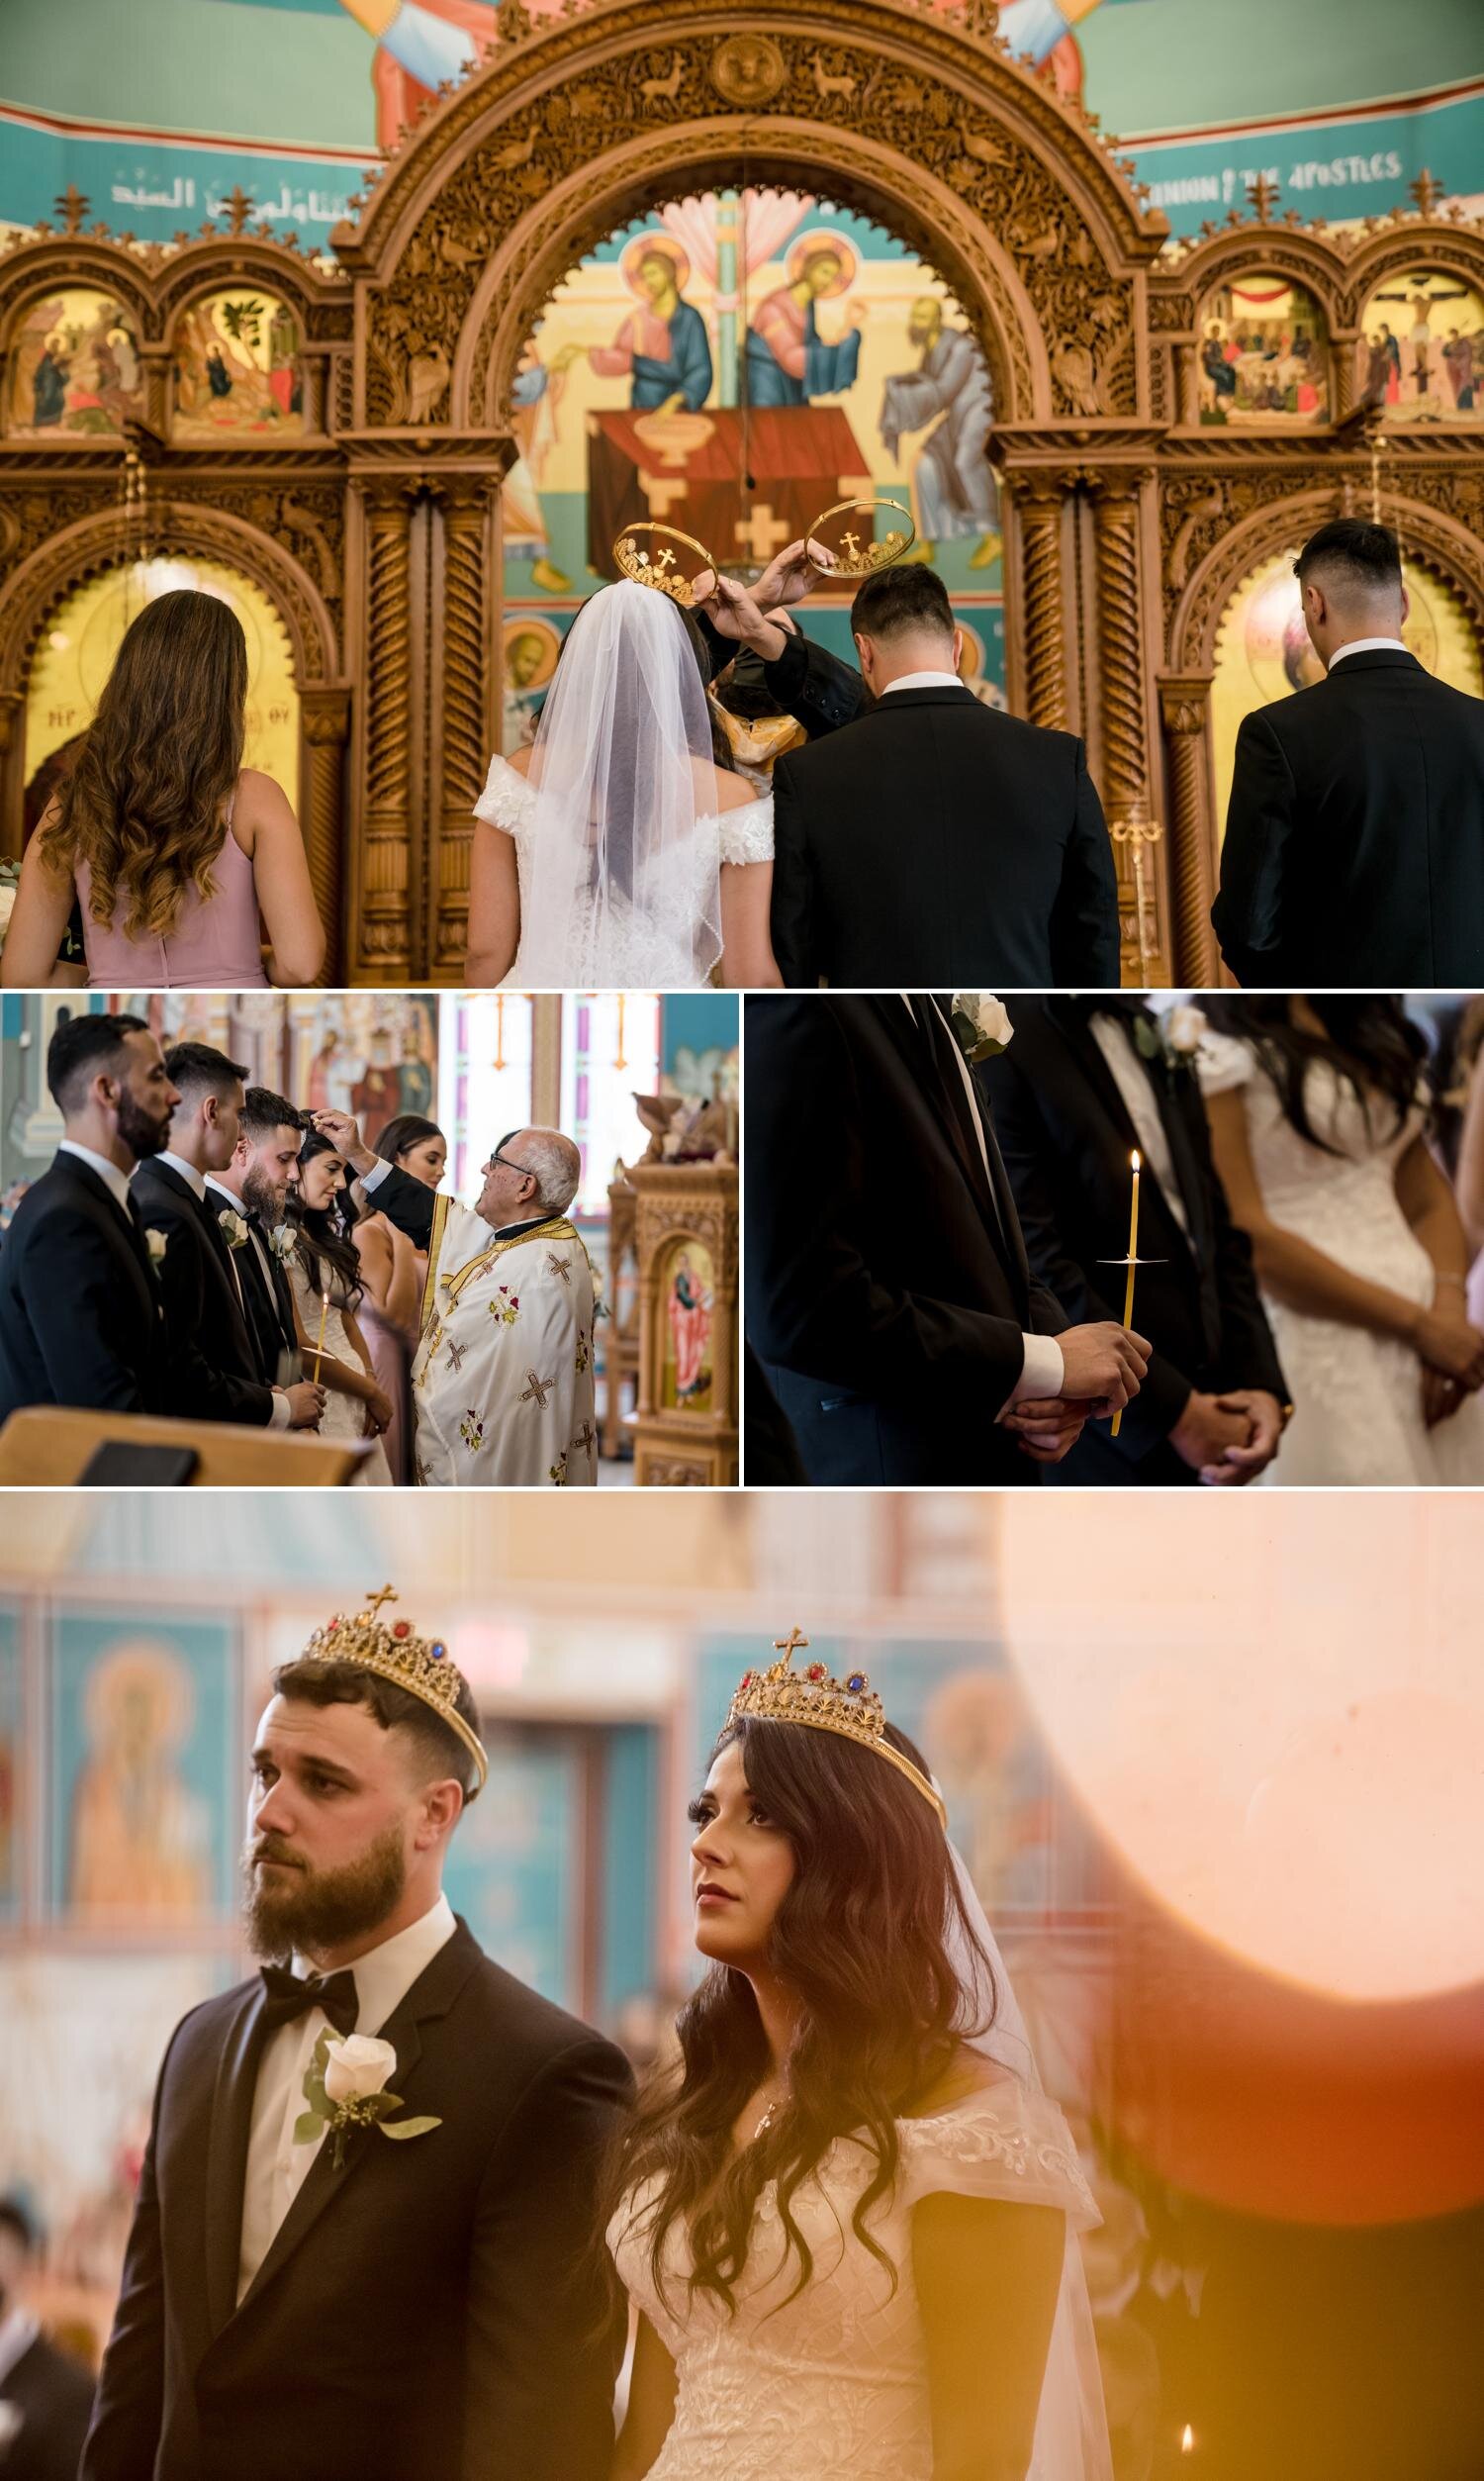 Lebanese wedding photos from a st Elias ceremony